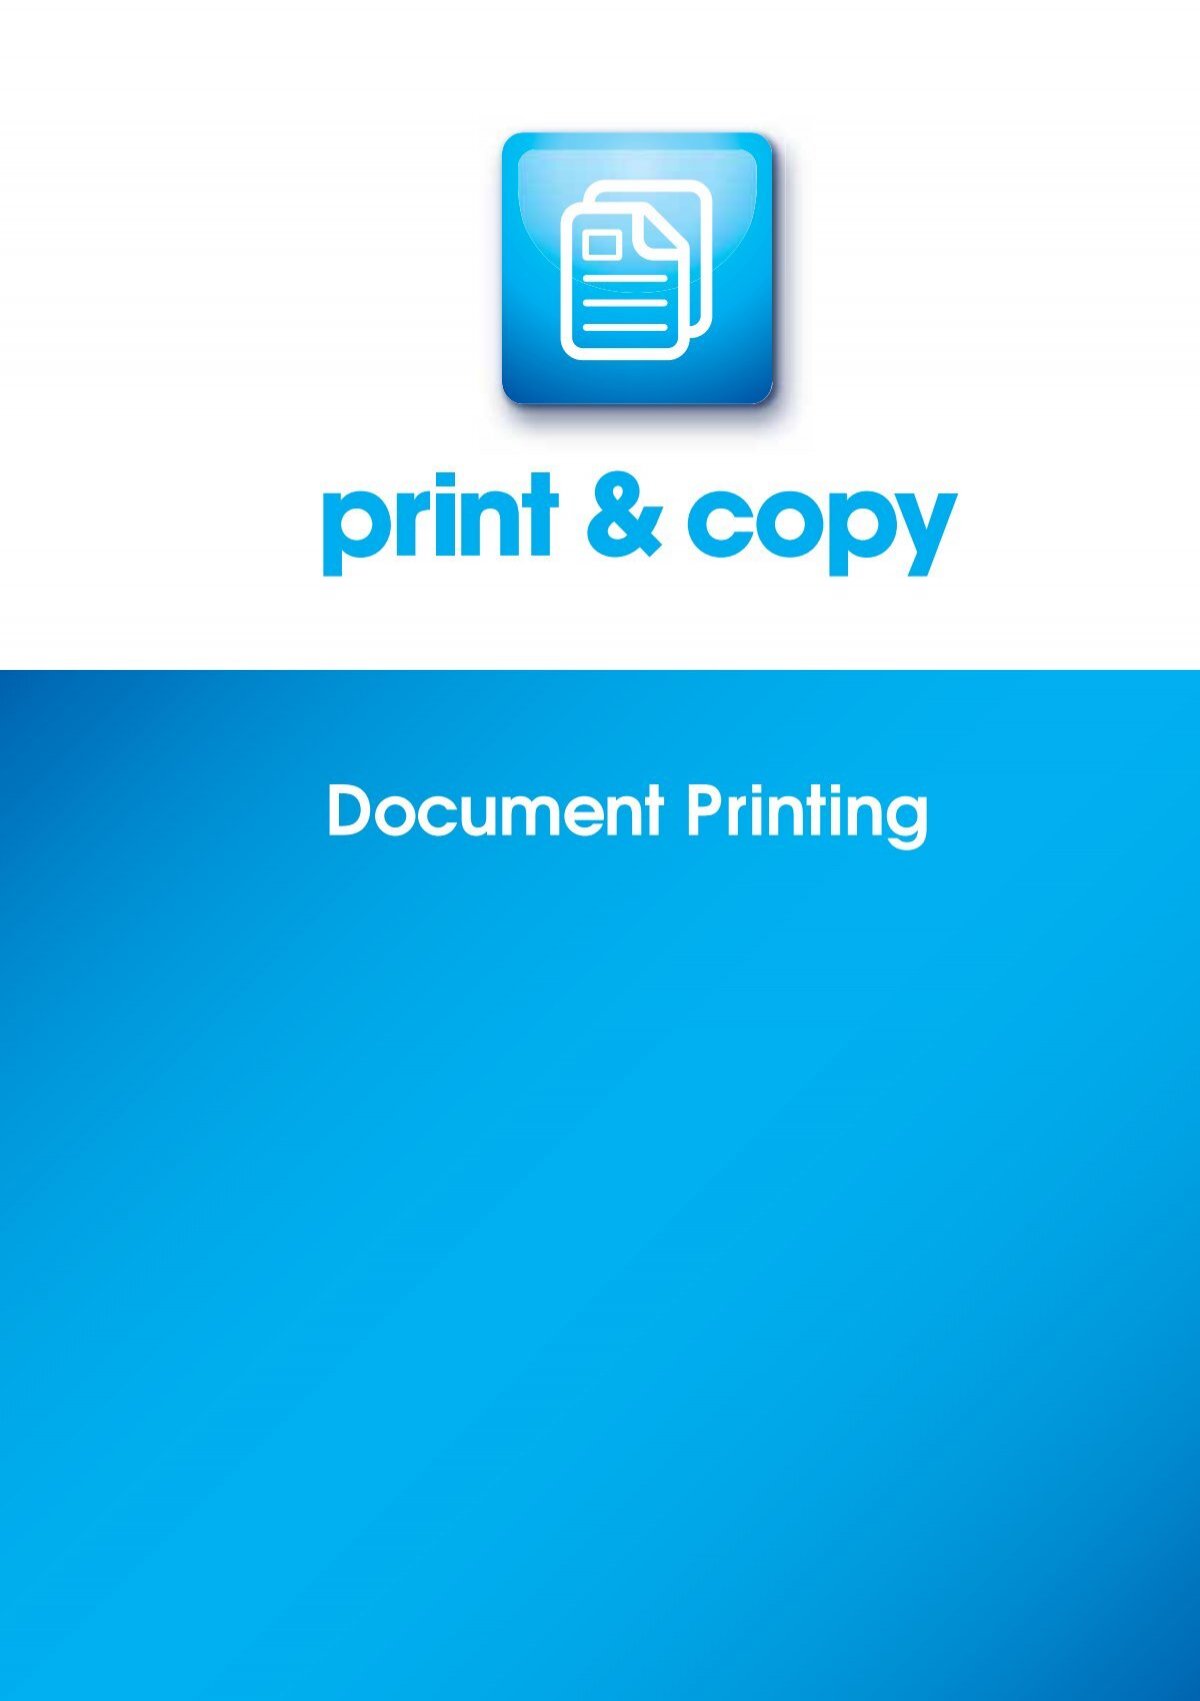 print-booklets-officeworks-naianecosta16